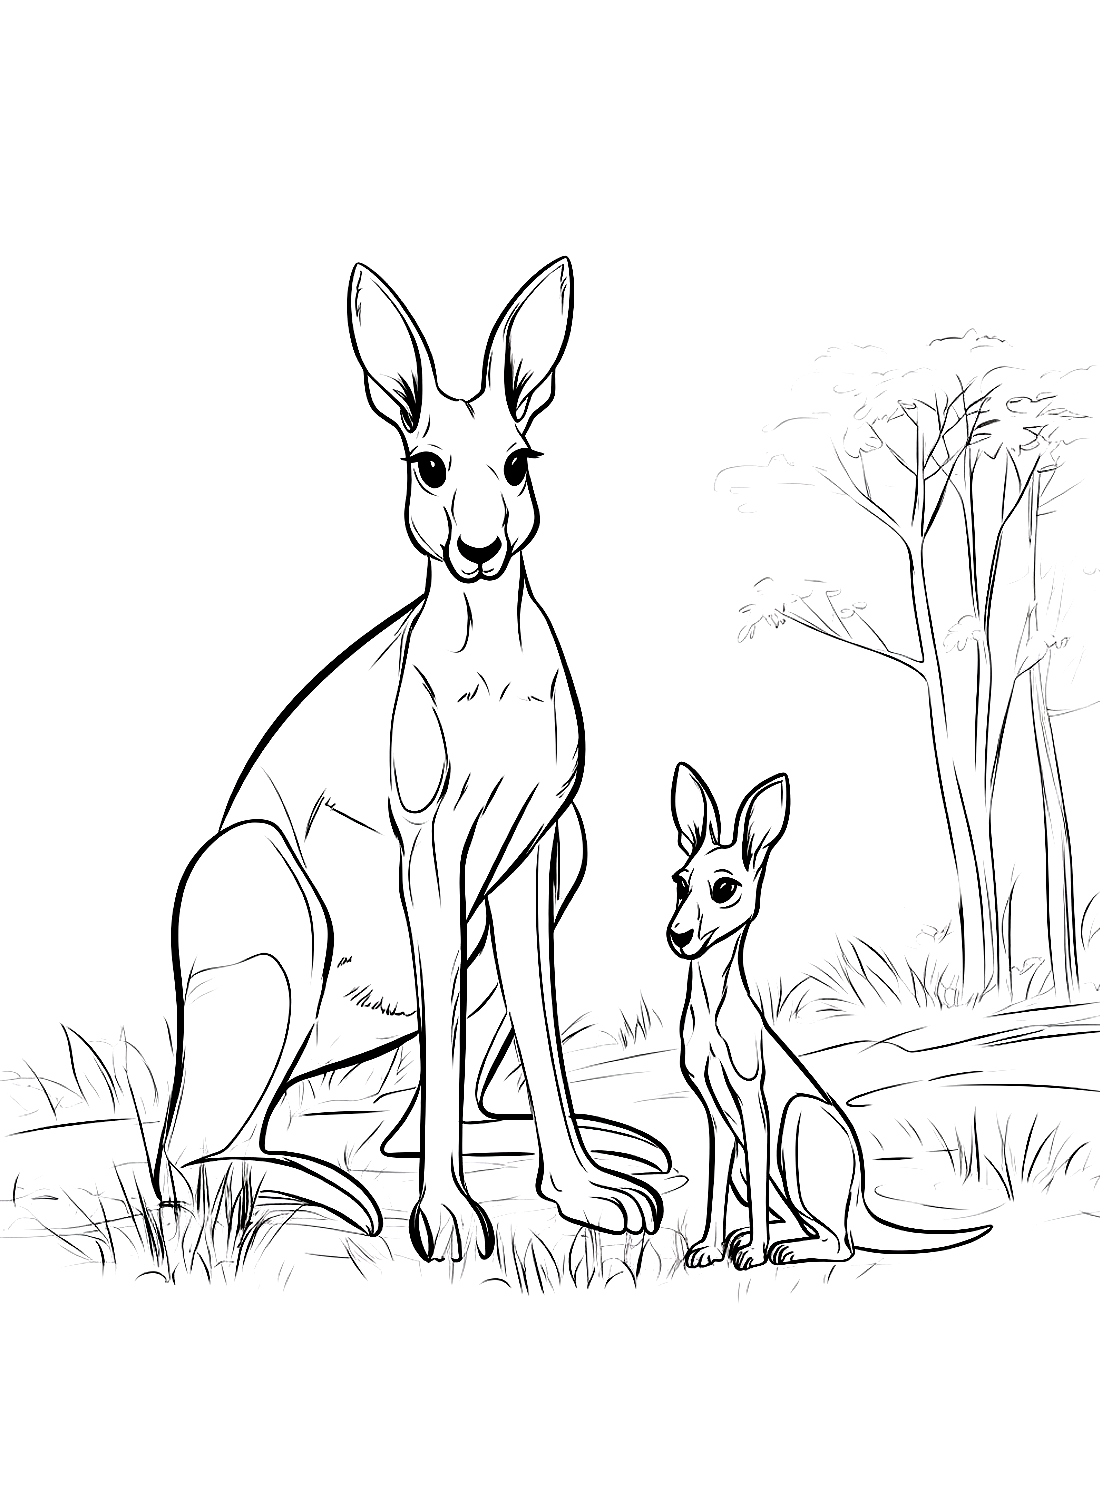 Zwei Rote Kängurus von Kangaroo